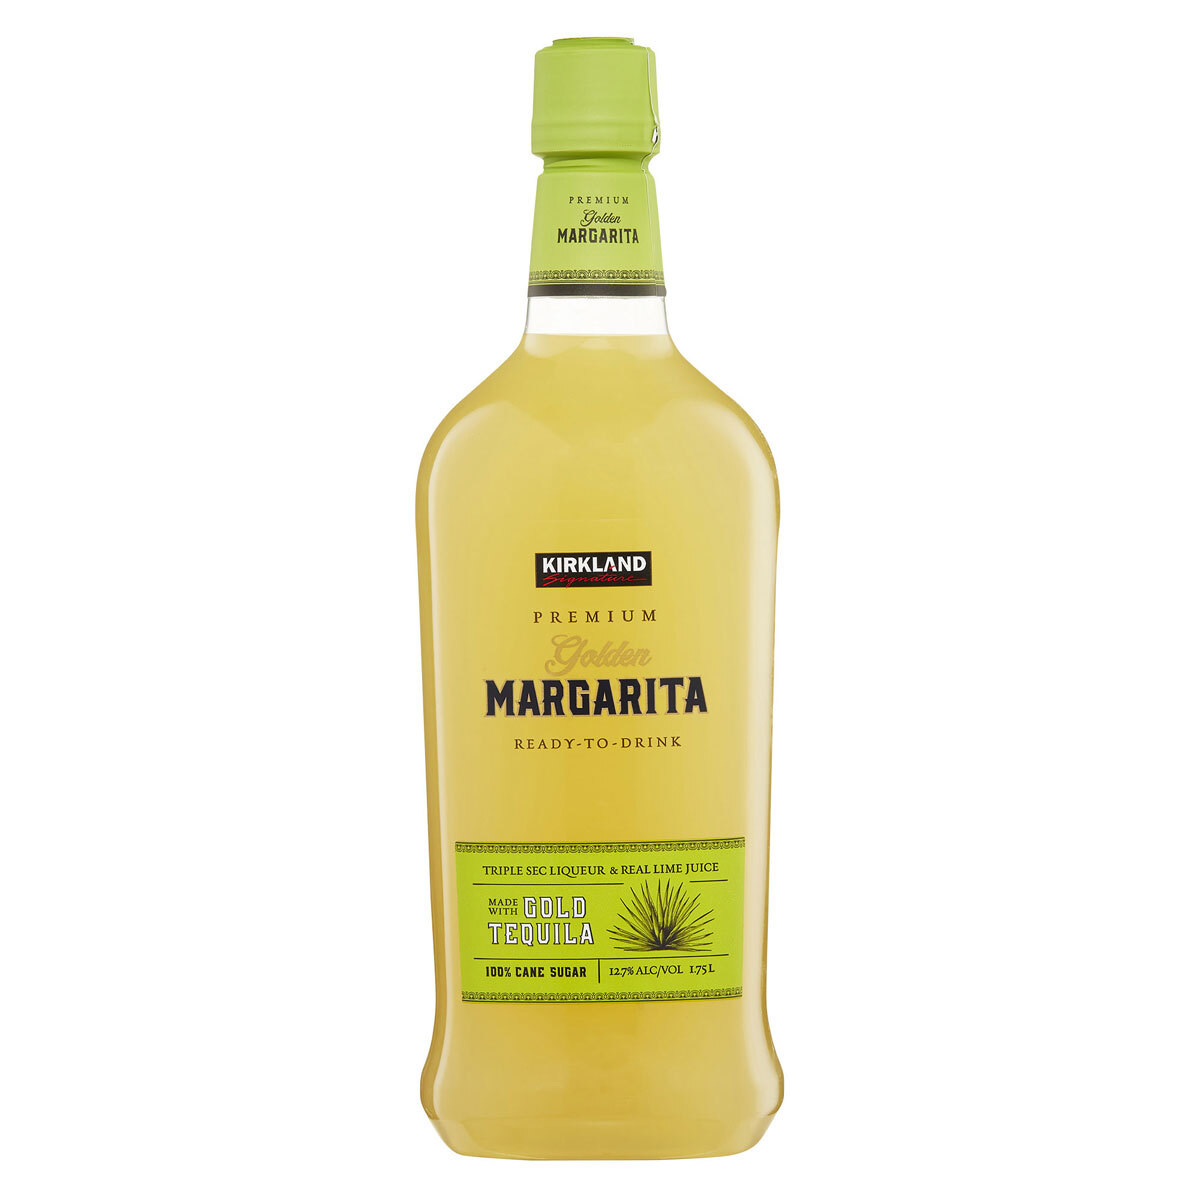 Kirkland Signature Golden Margarita Premium Ready To Drin